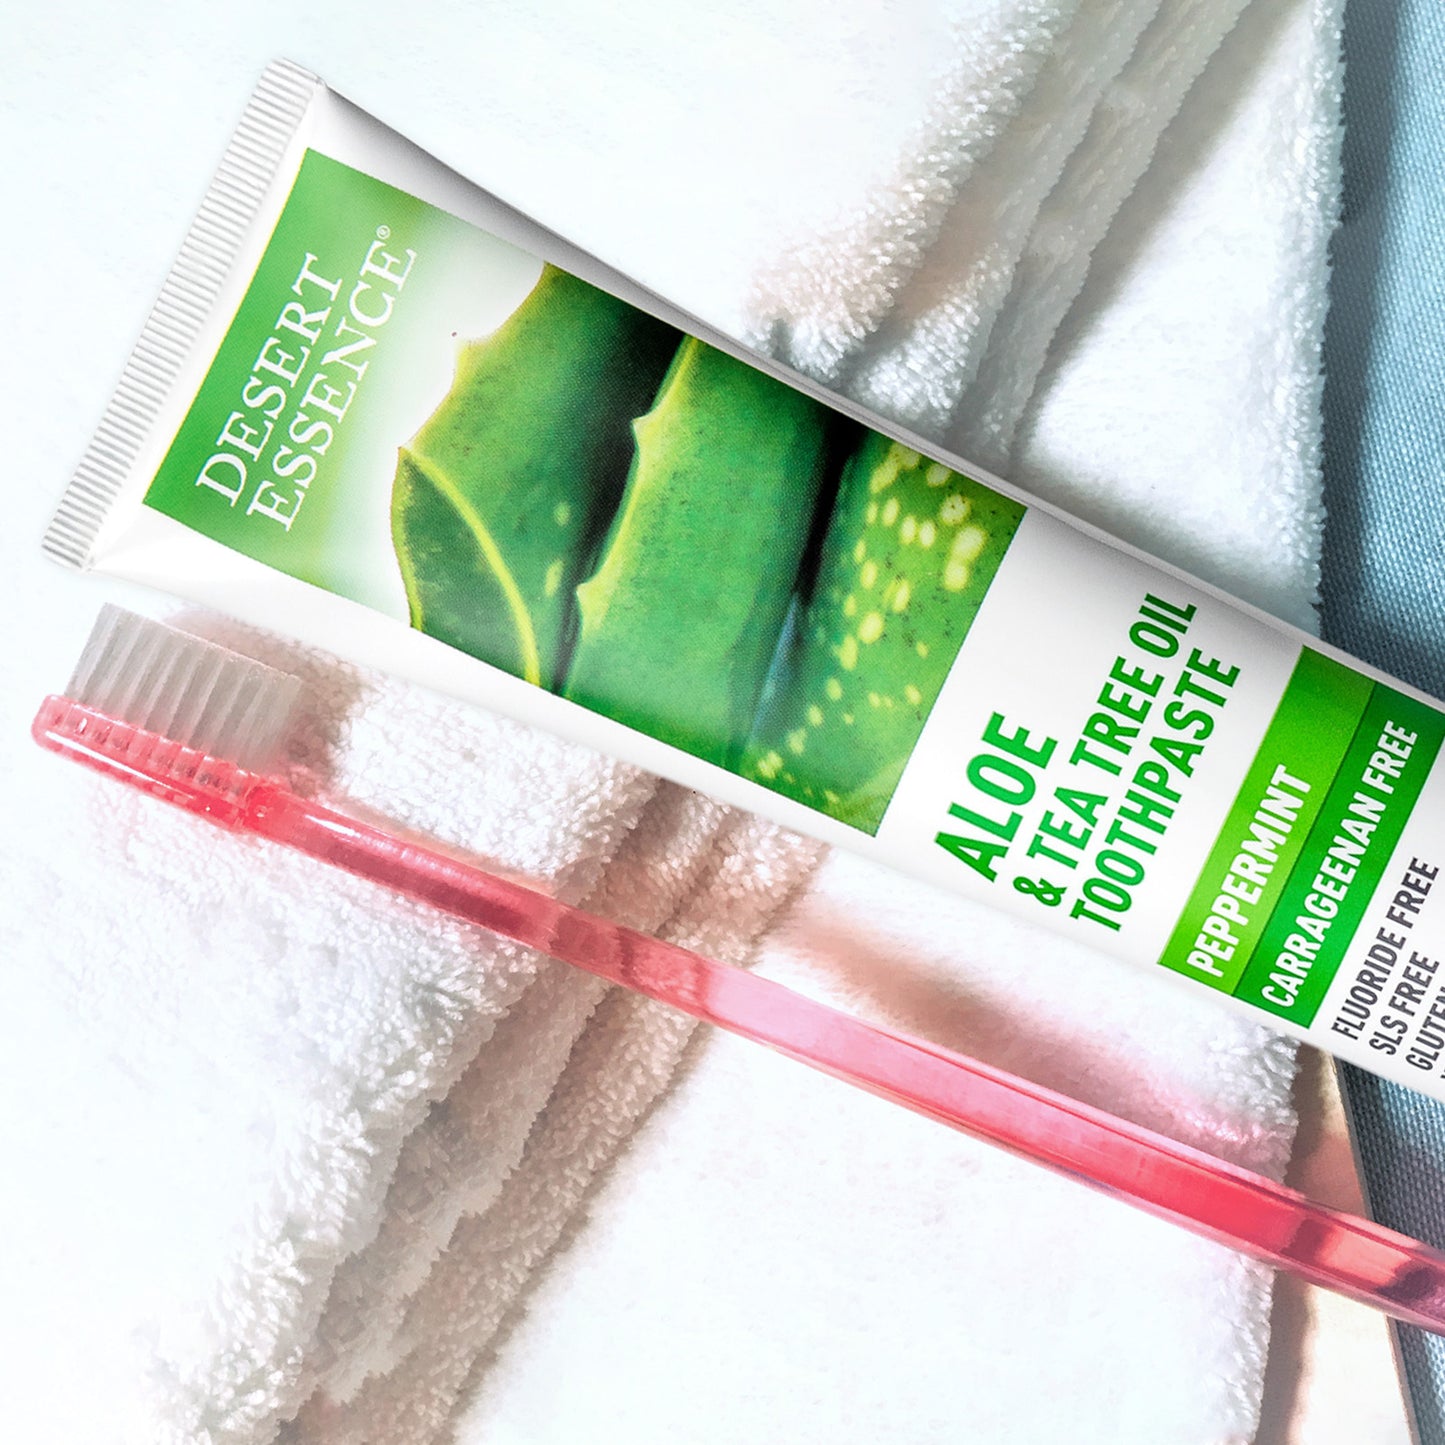 Fluoride Free Aloe & Tea Tree Oil Toothpaste（フッ素フリー・アロエ歯磨き粉）